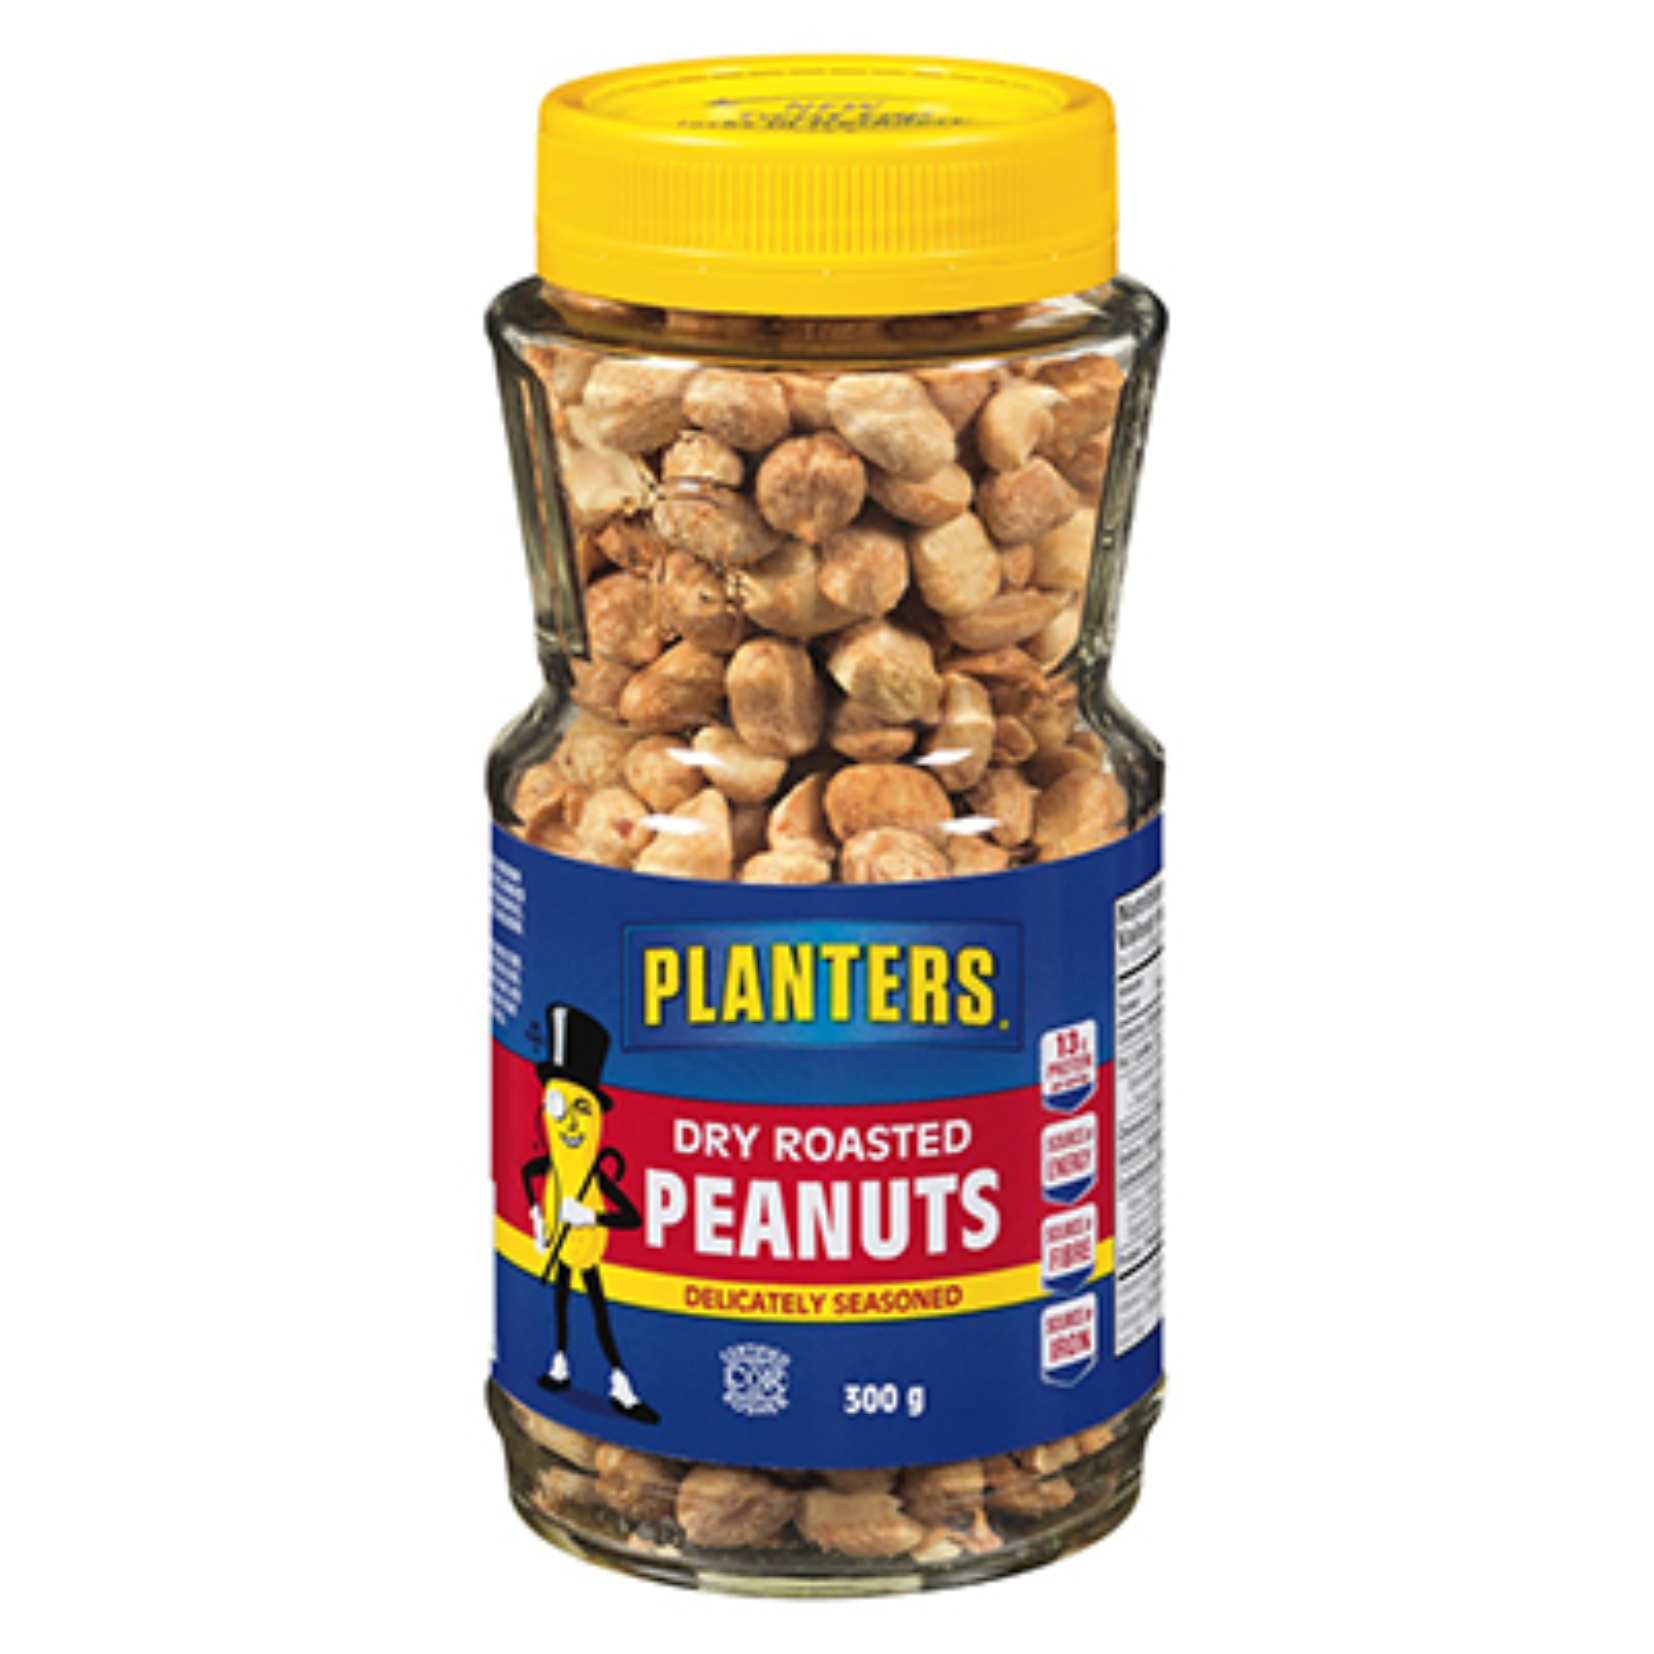 Planters Dry Roasted Peanuts 300g